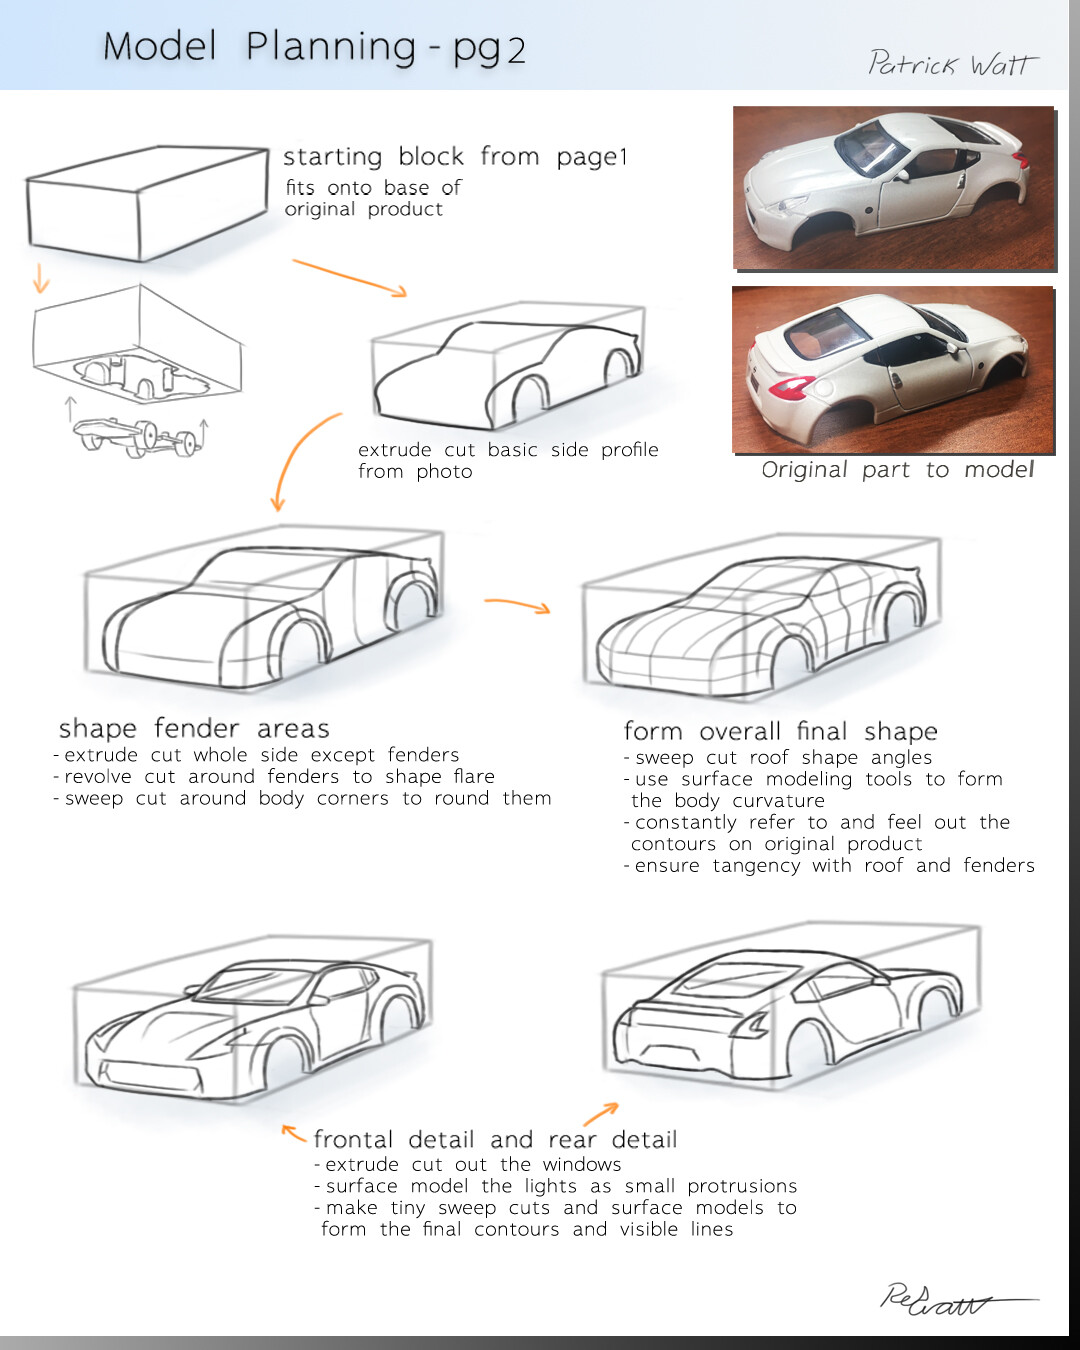 How to Make Homemade Model Cars - Paudi Model